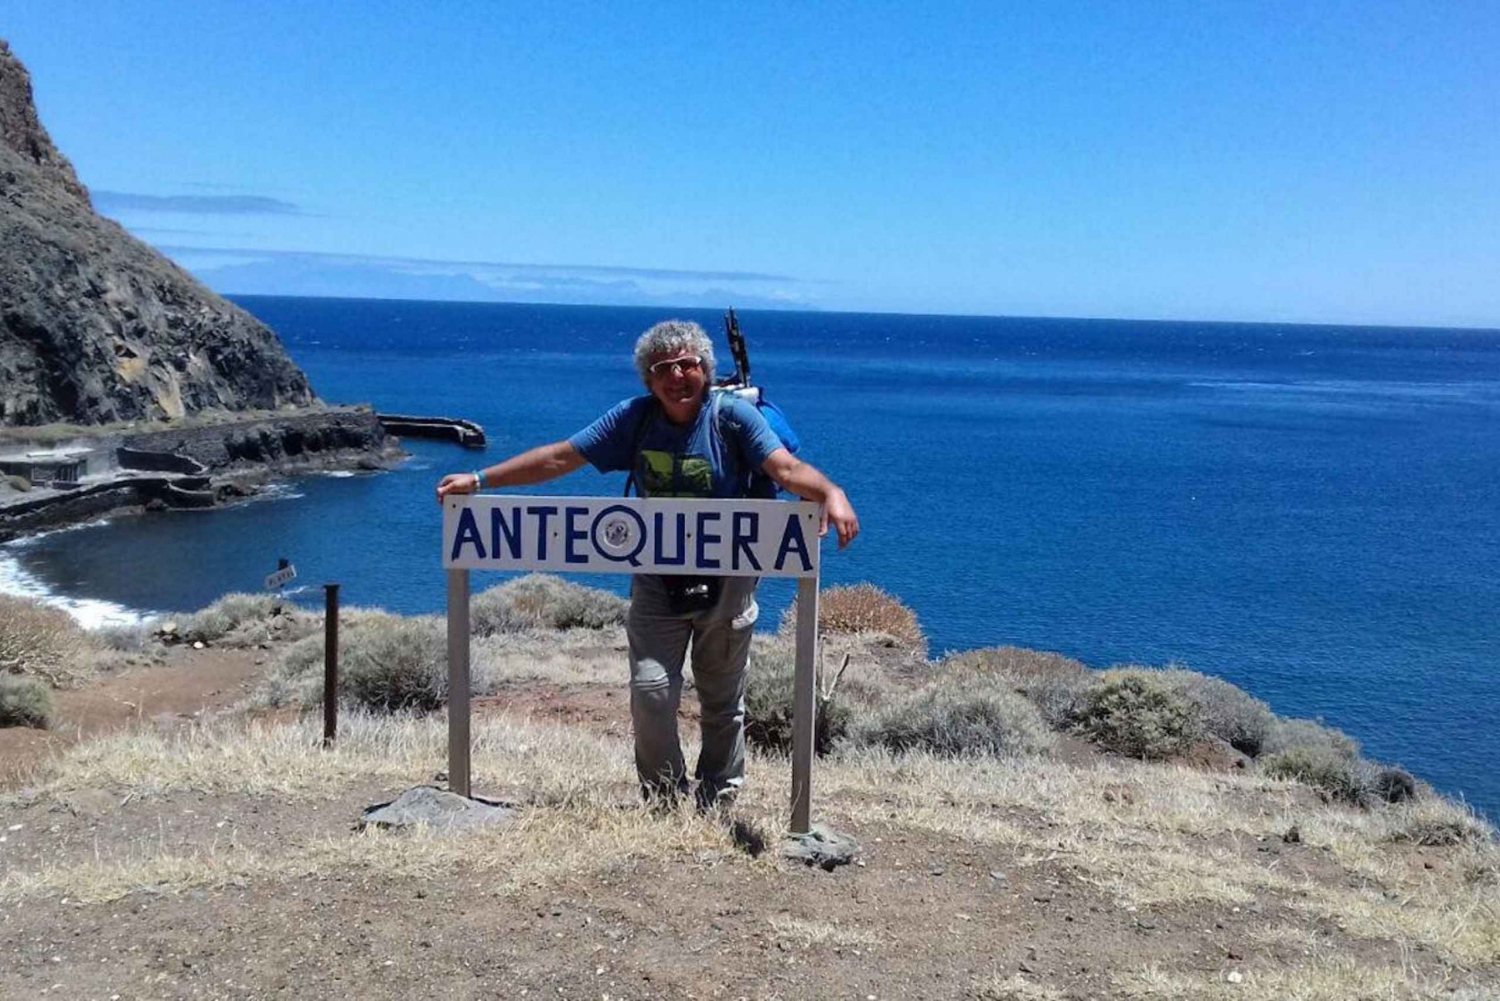 Canary Islands: Premium Route at Barranco de Antequera